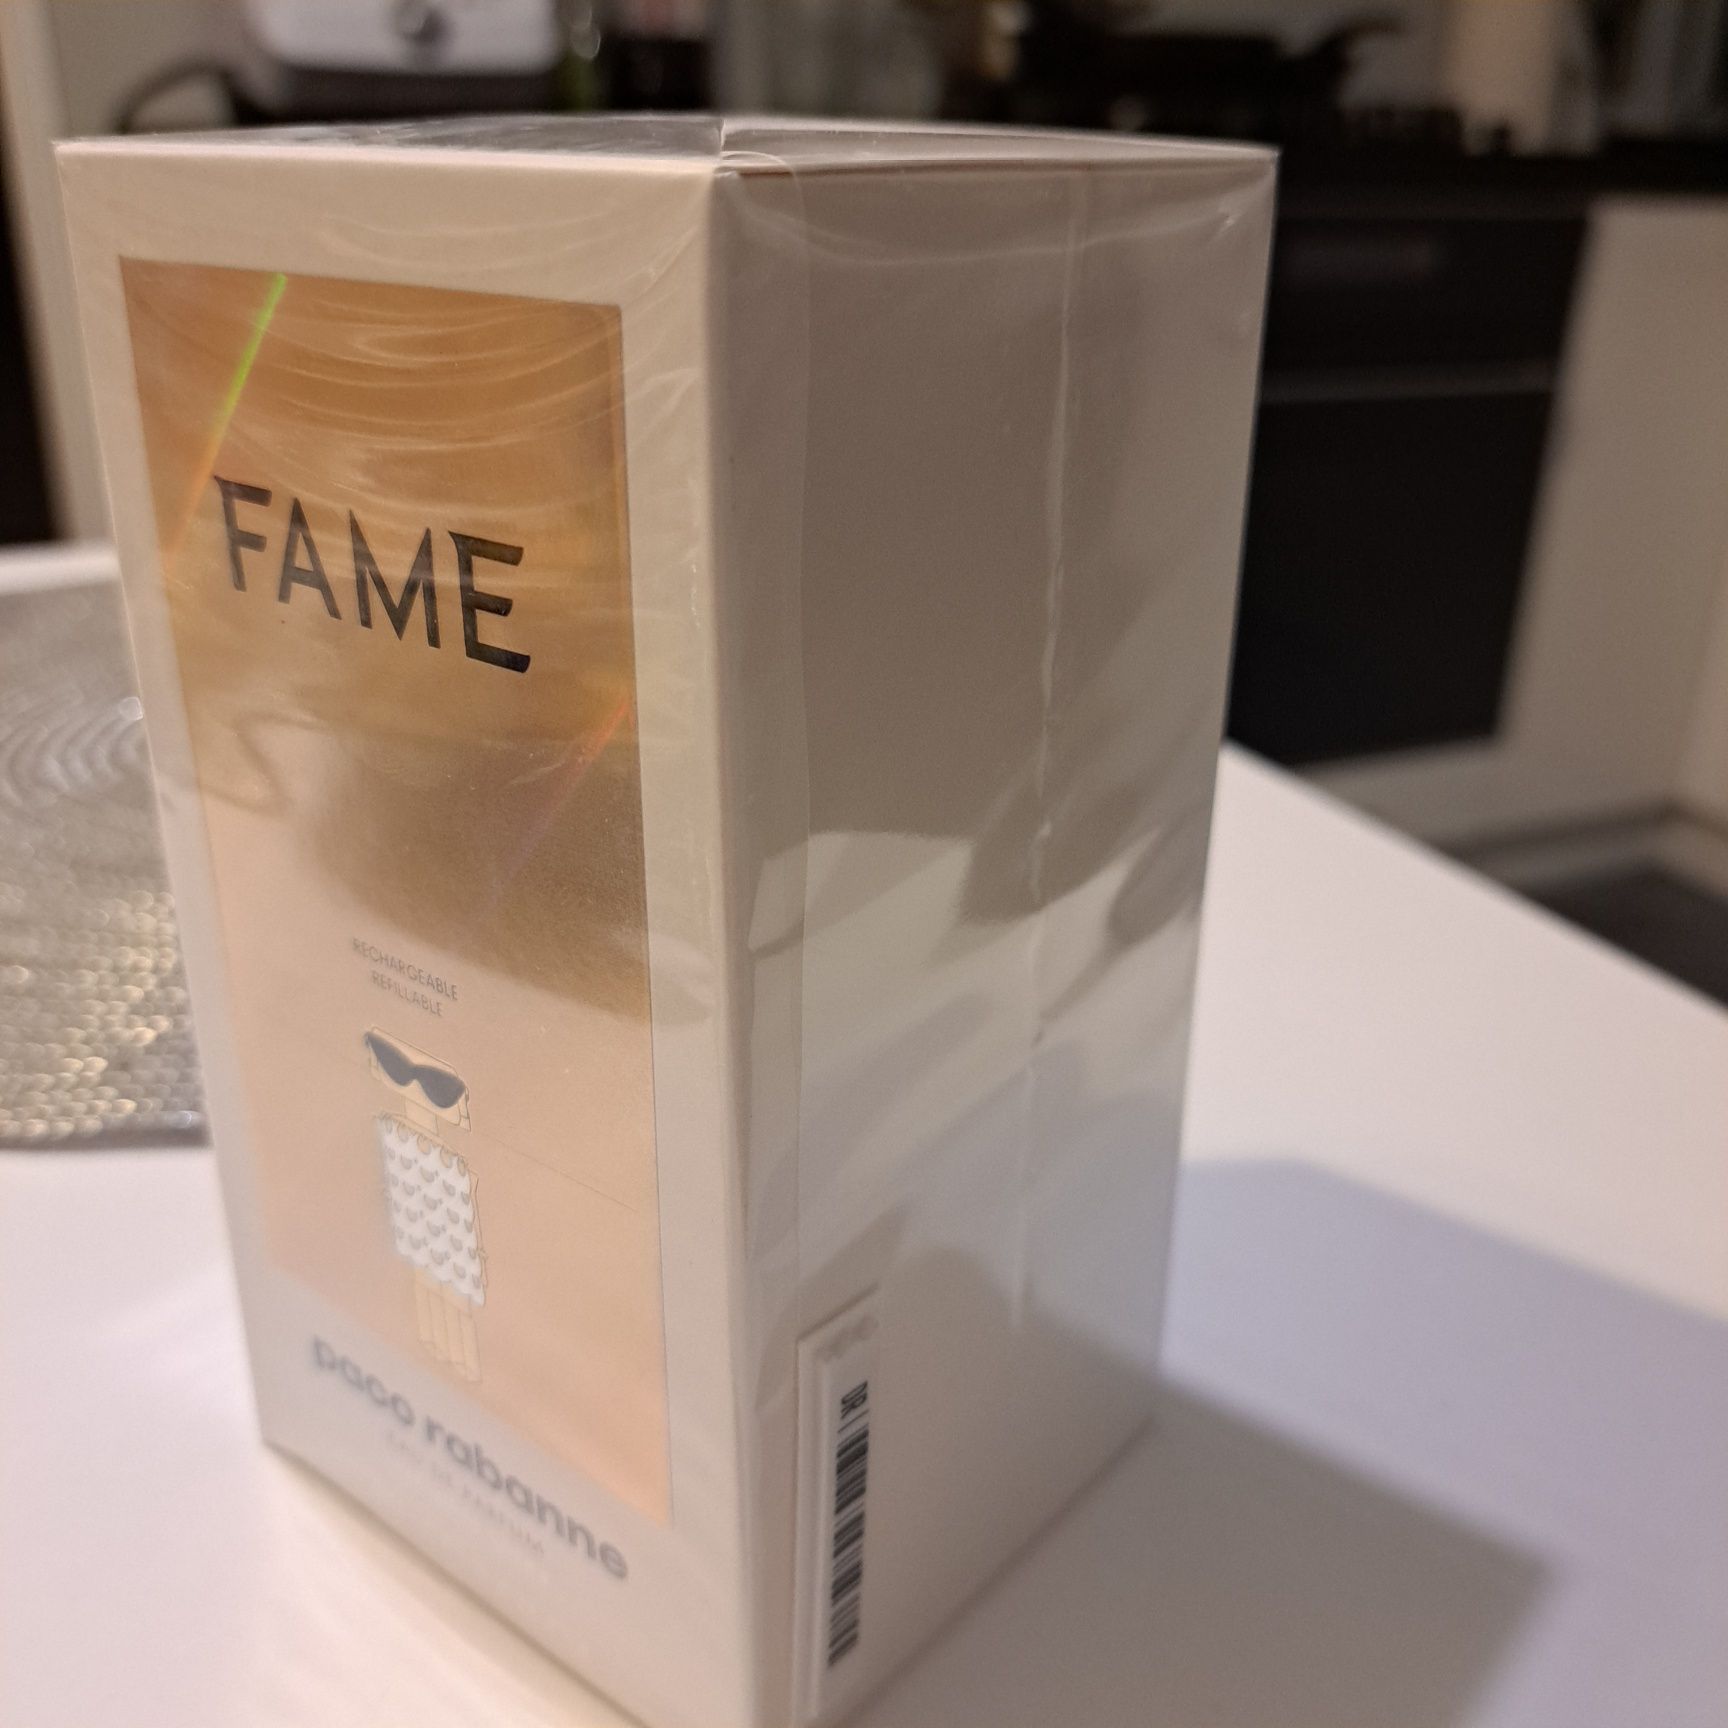 Perfum Paco Rabanne Fame 80 ml oryginalny